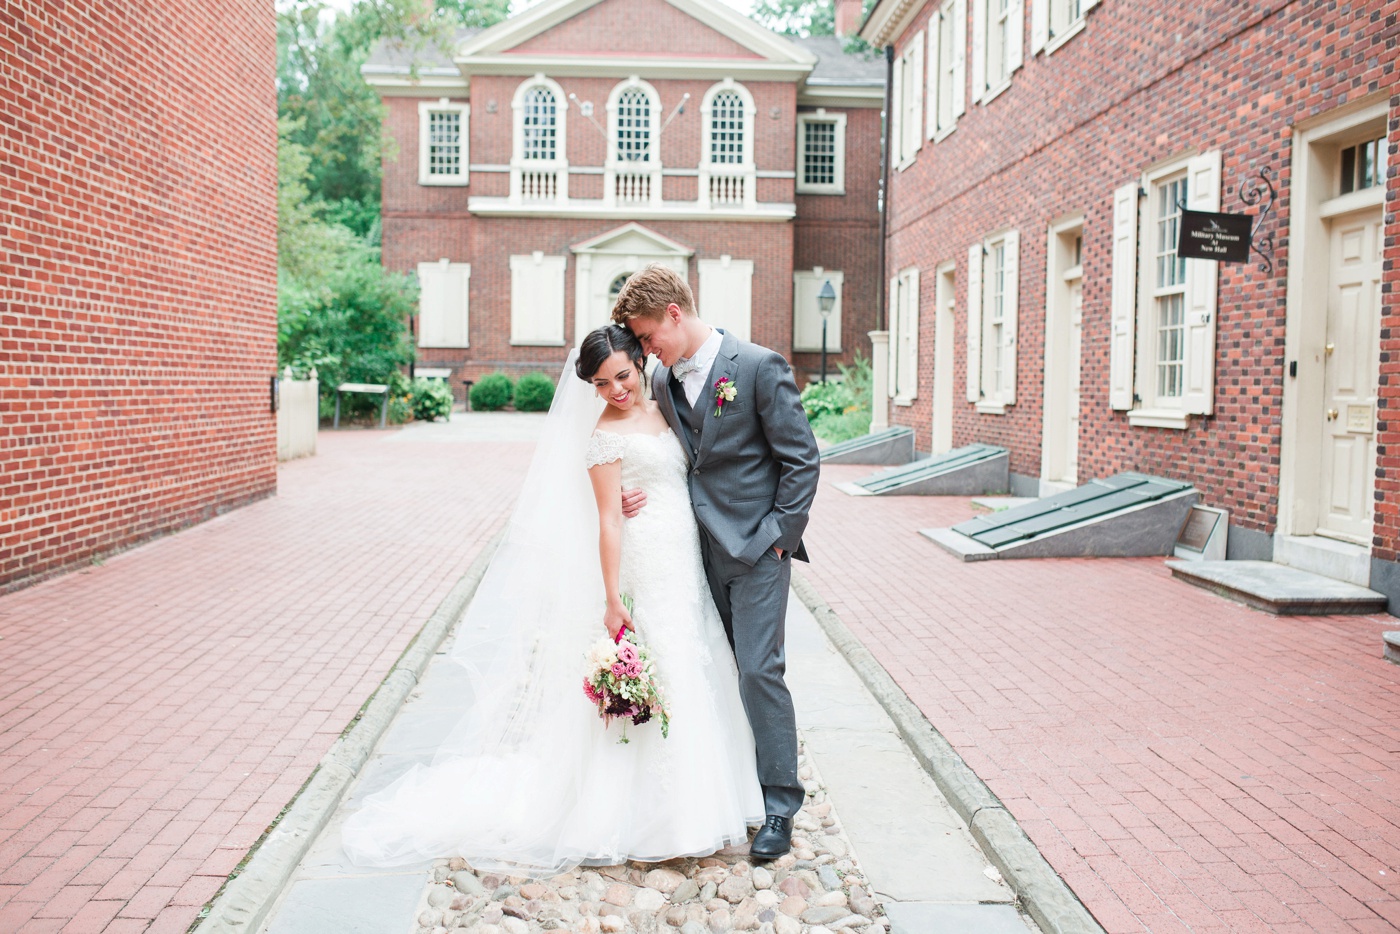 52 - Bride + Groom Portraits - Philadelphia Wedding Photographer - Alison Dunn Photography photo